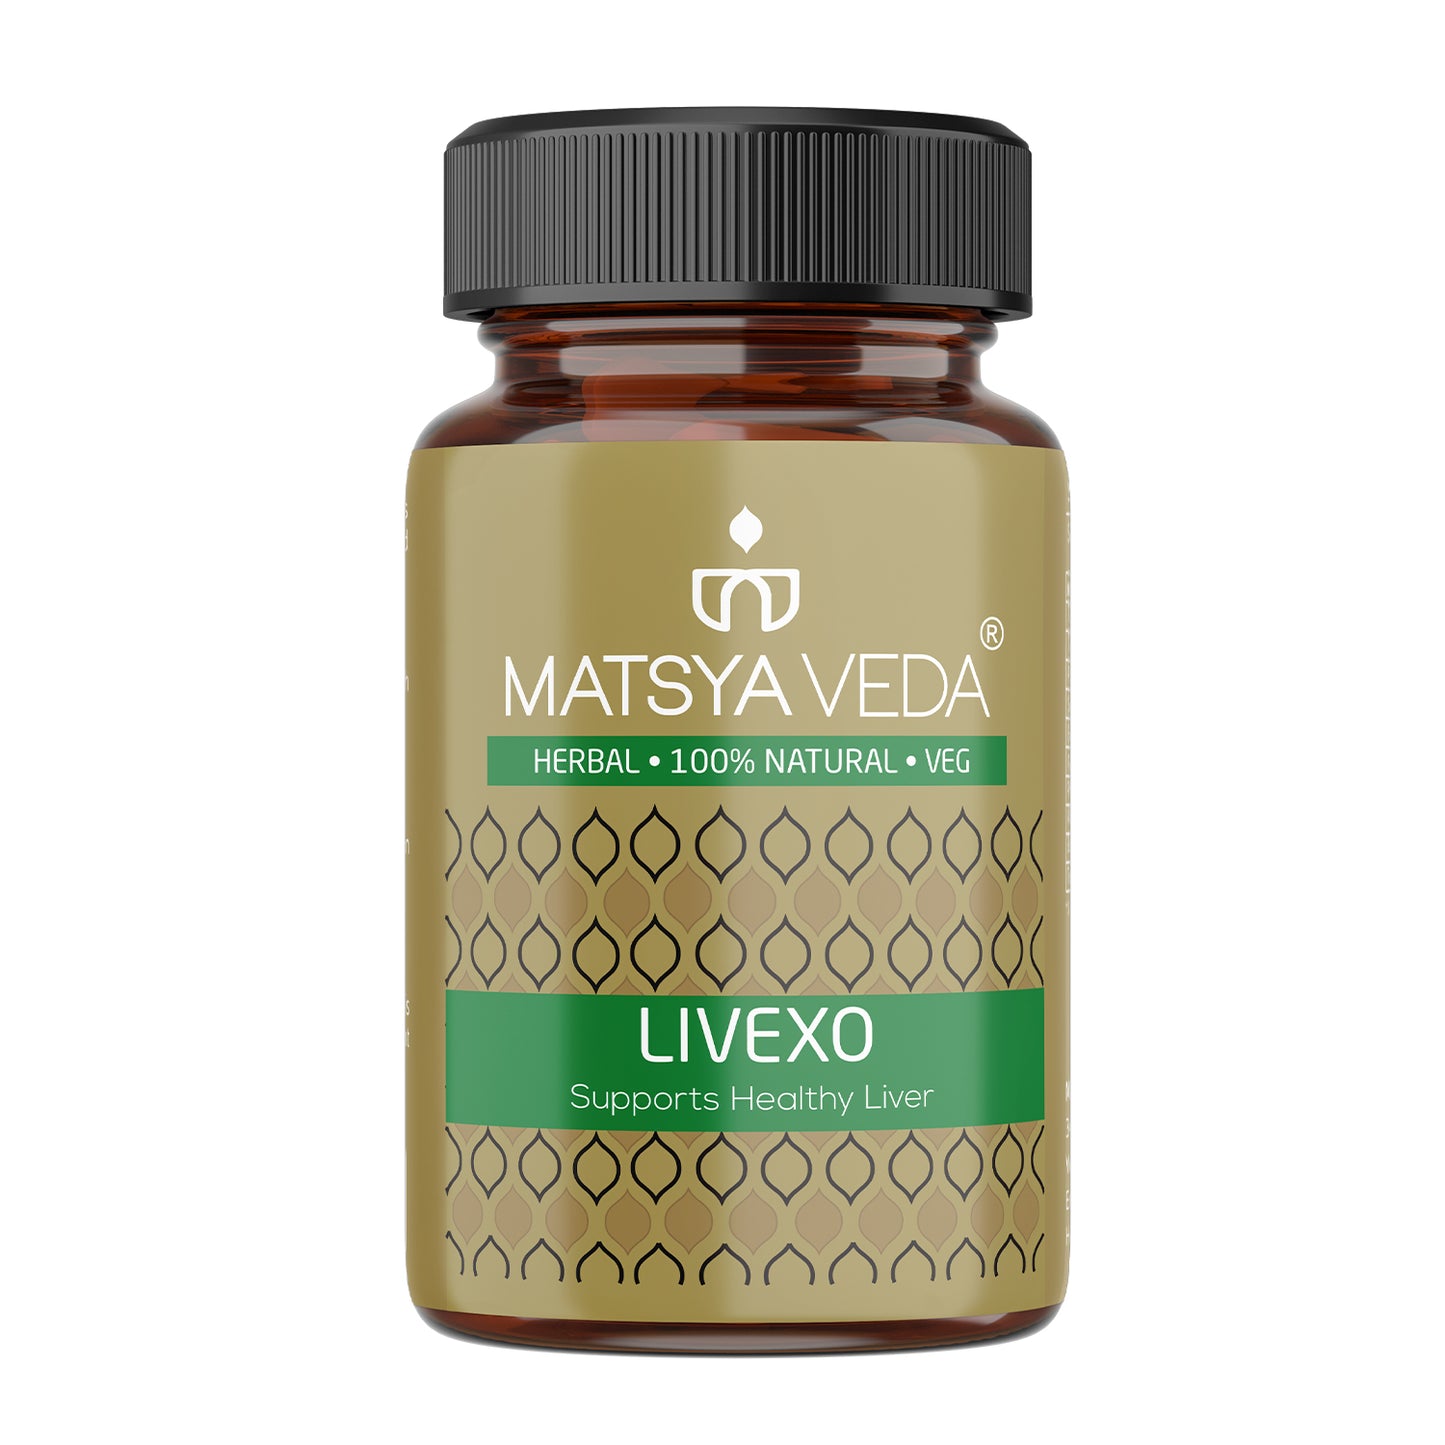 Livexo - Ayurvedic Capsule to Support Liver Detox & Fatty Liver